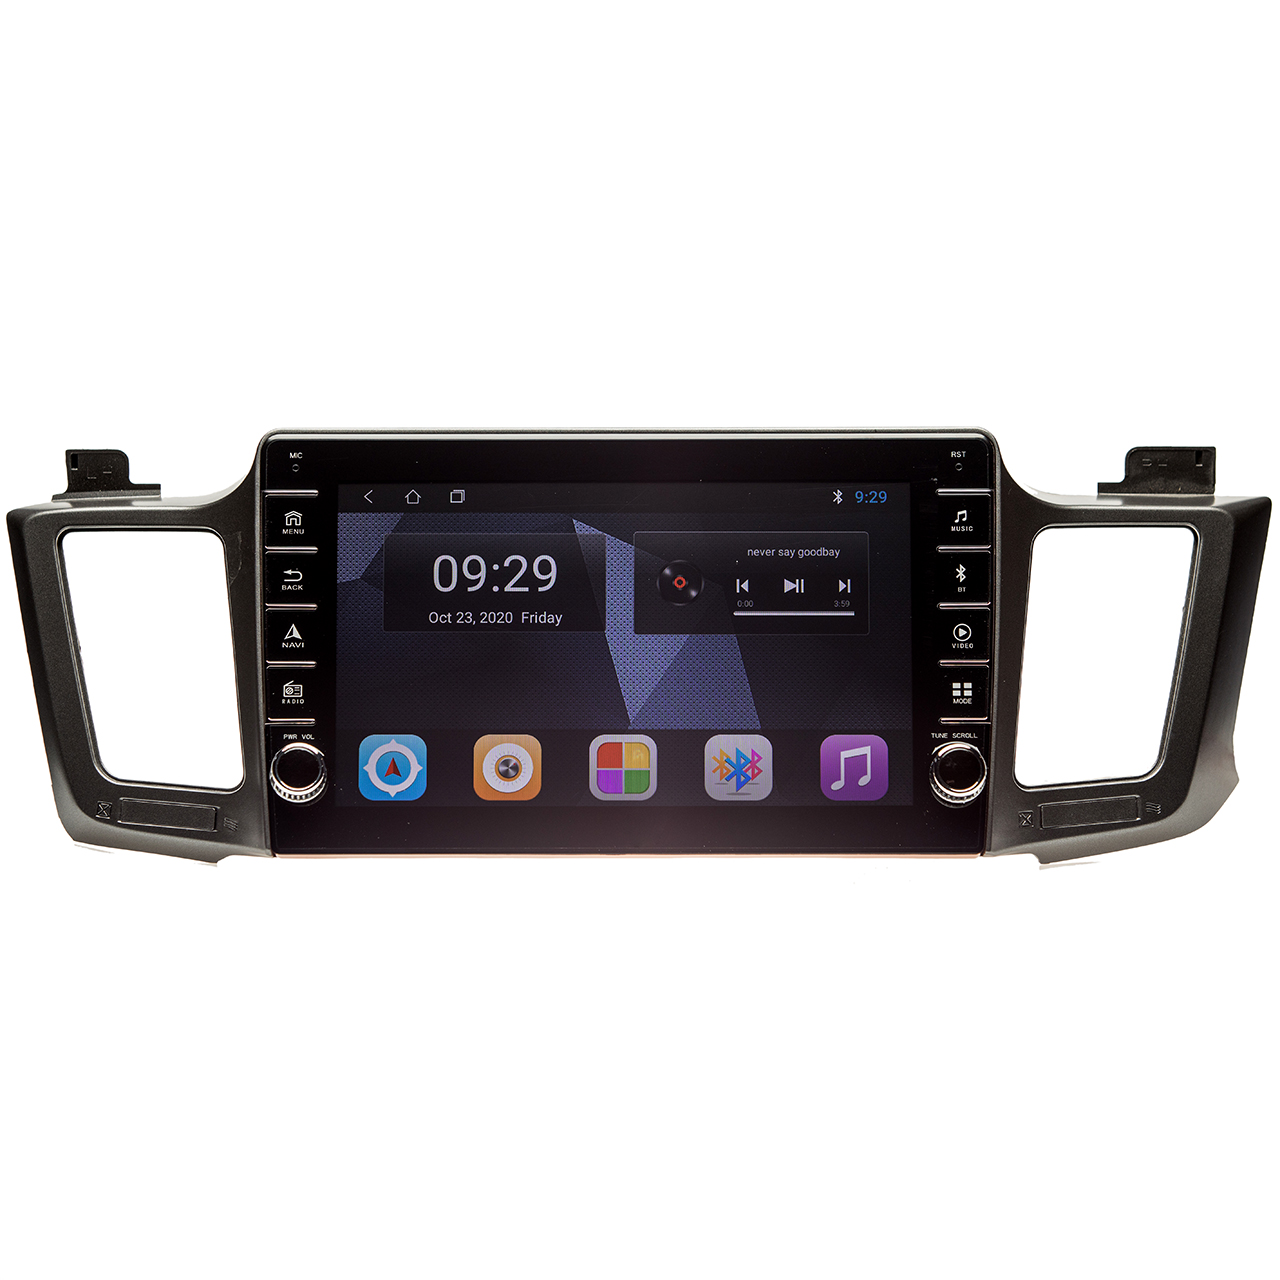 Navigatie AUTONAV PLUS Android GPS Dedicata Toyota RAV4 2013-2016, Model PRO Memorie 16GB Stocare, 1GB DDR3 RAM, Butoane Laterale Si Regulator Volum, Display 9